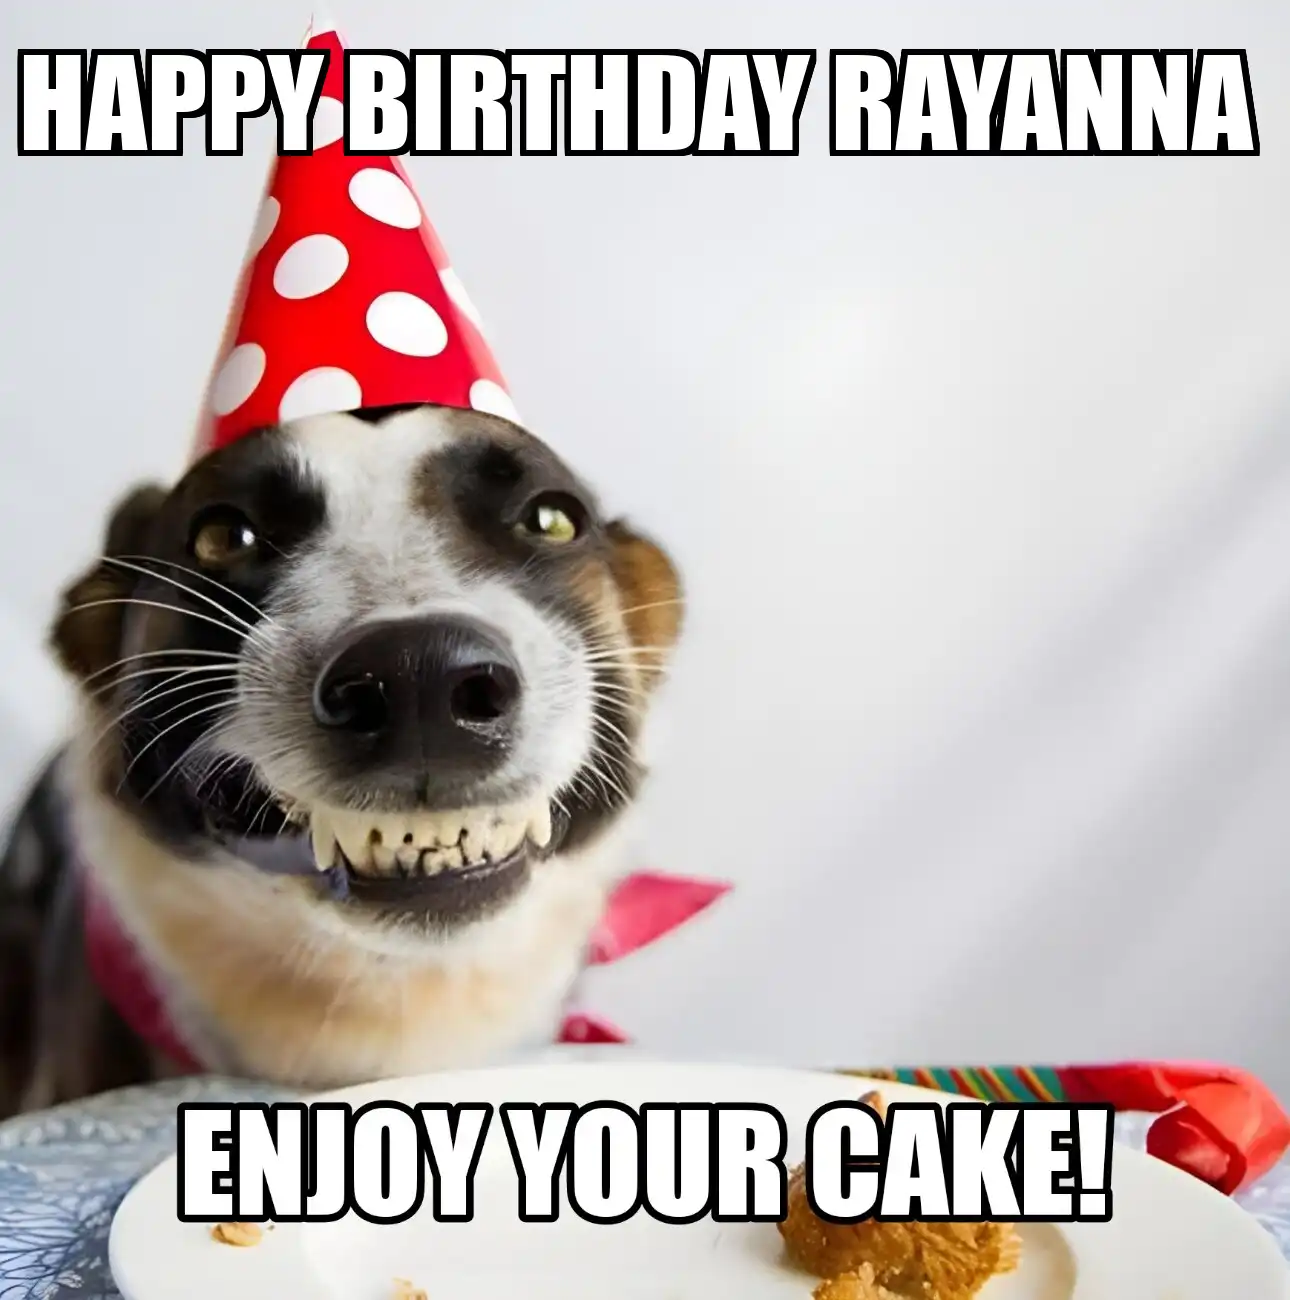 Happy Birthday Rayanna Enjoy Your Cake Dog Meme